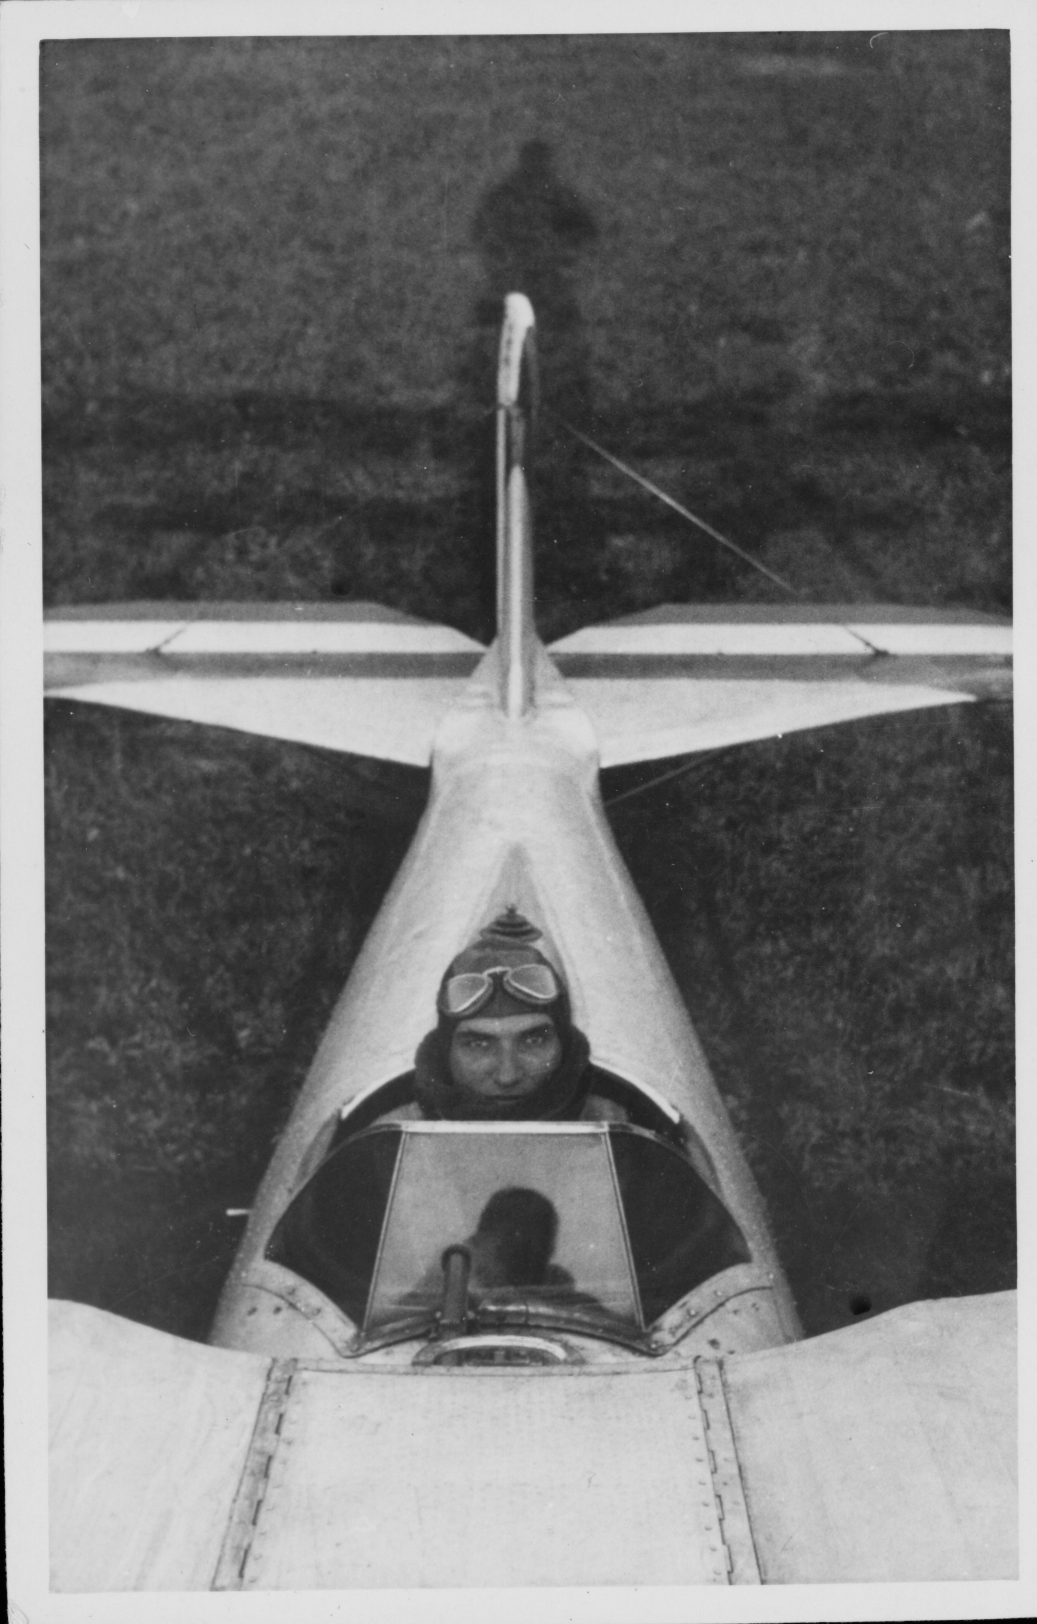 Giosue Calamai, Francesco's father, in the cockpit while on duty with the Royal Italian Air Force.